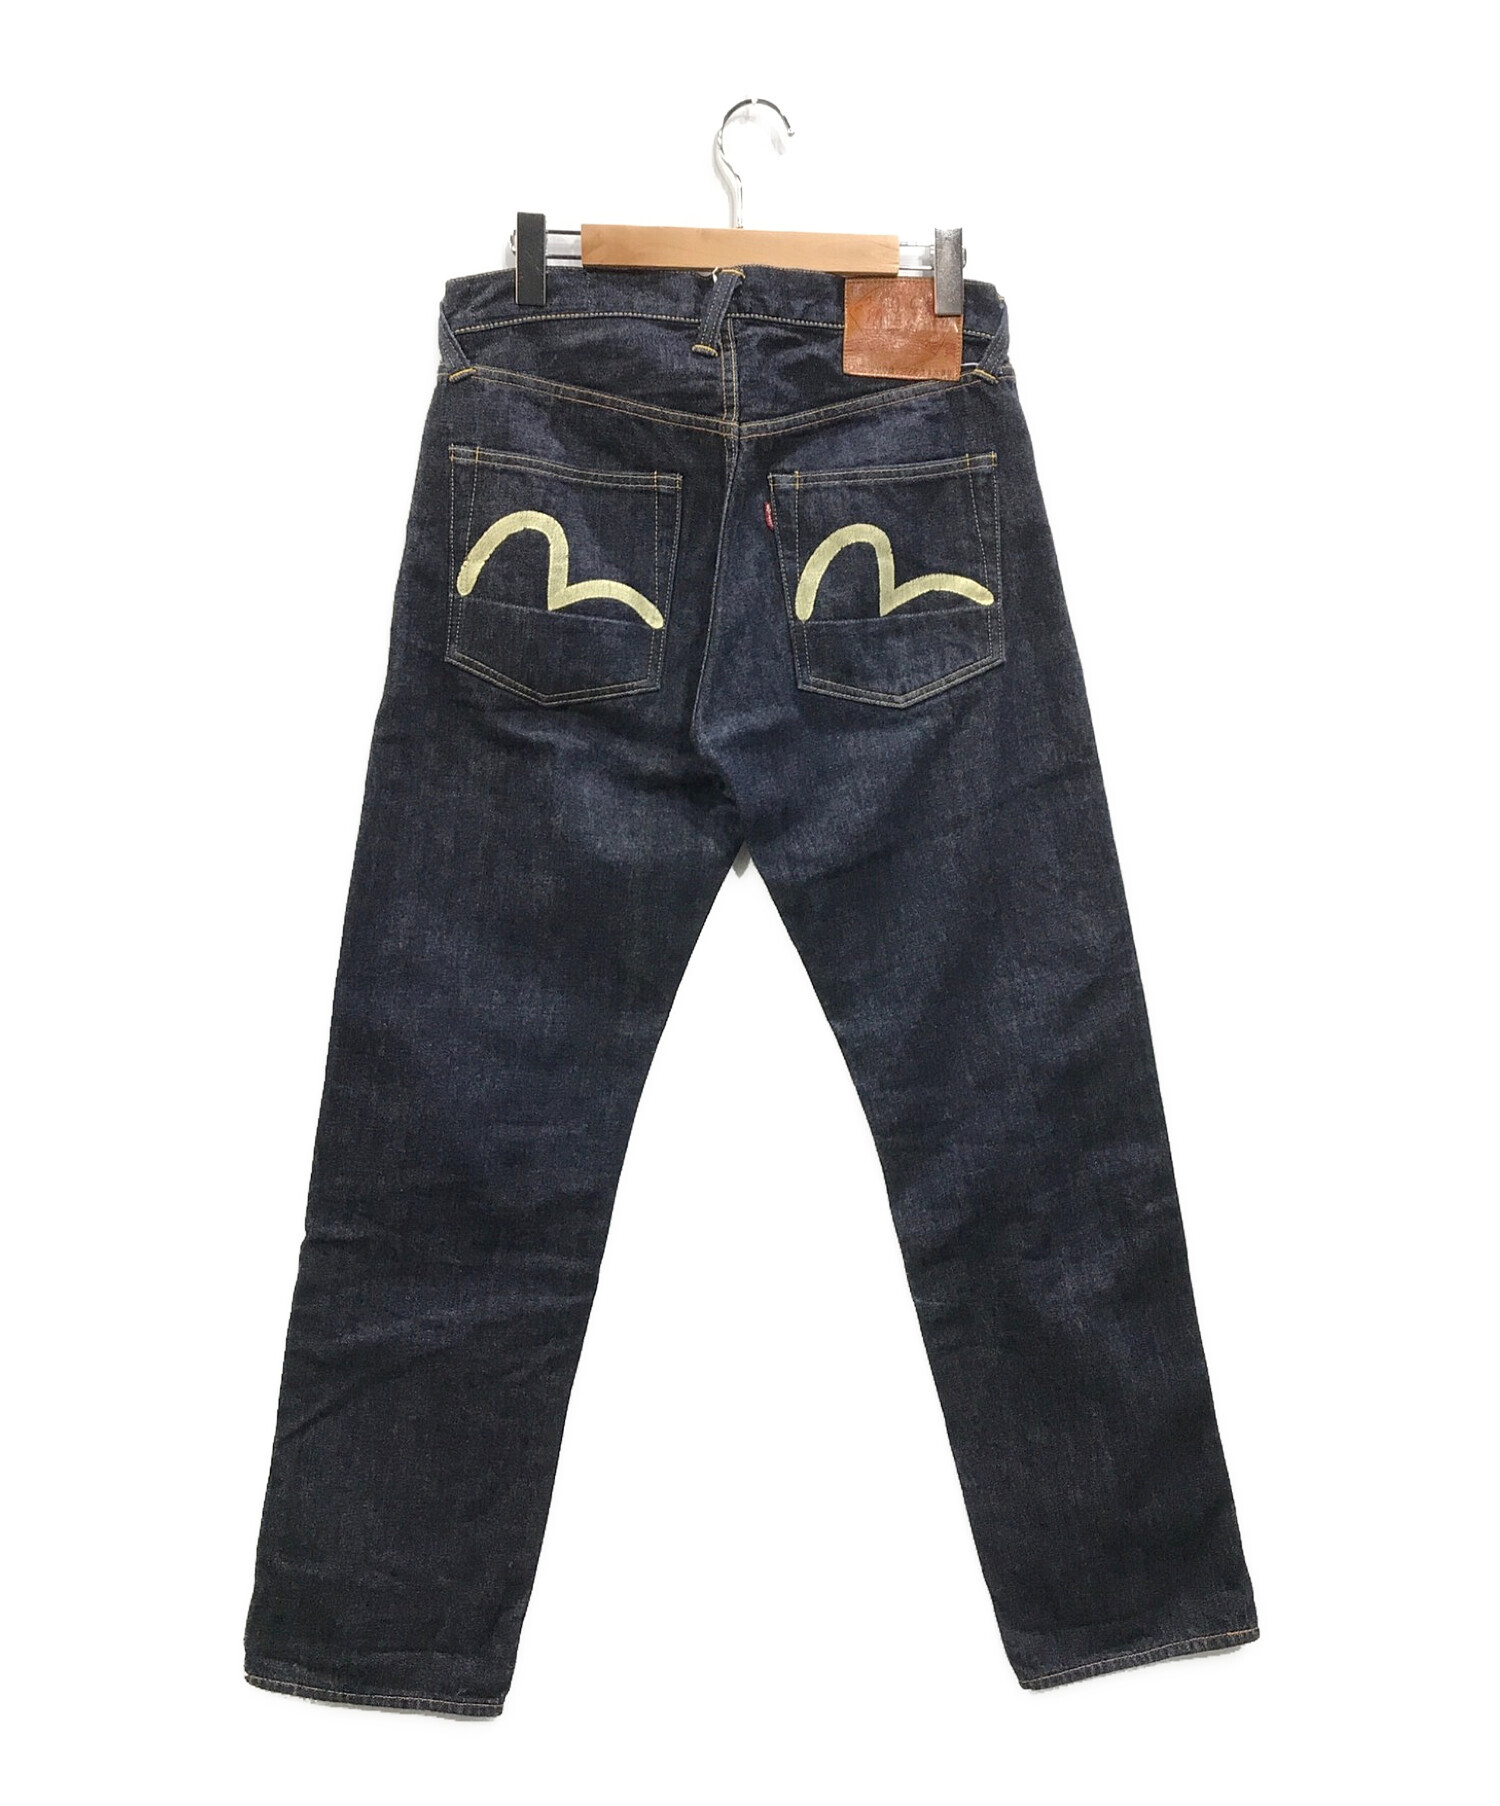 Evisu Jeans (エヴィスジーンズ) Lot.2000 No.2 DENIM REGULAR STRAIGHT デニムパンツ インディゴ  サイズ:W32